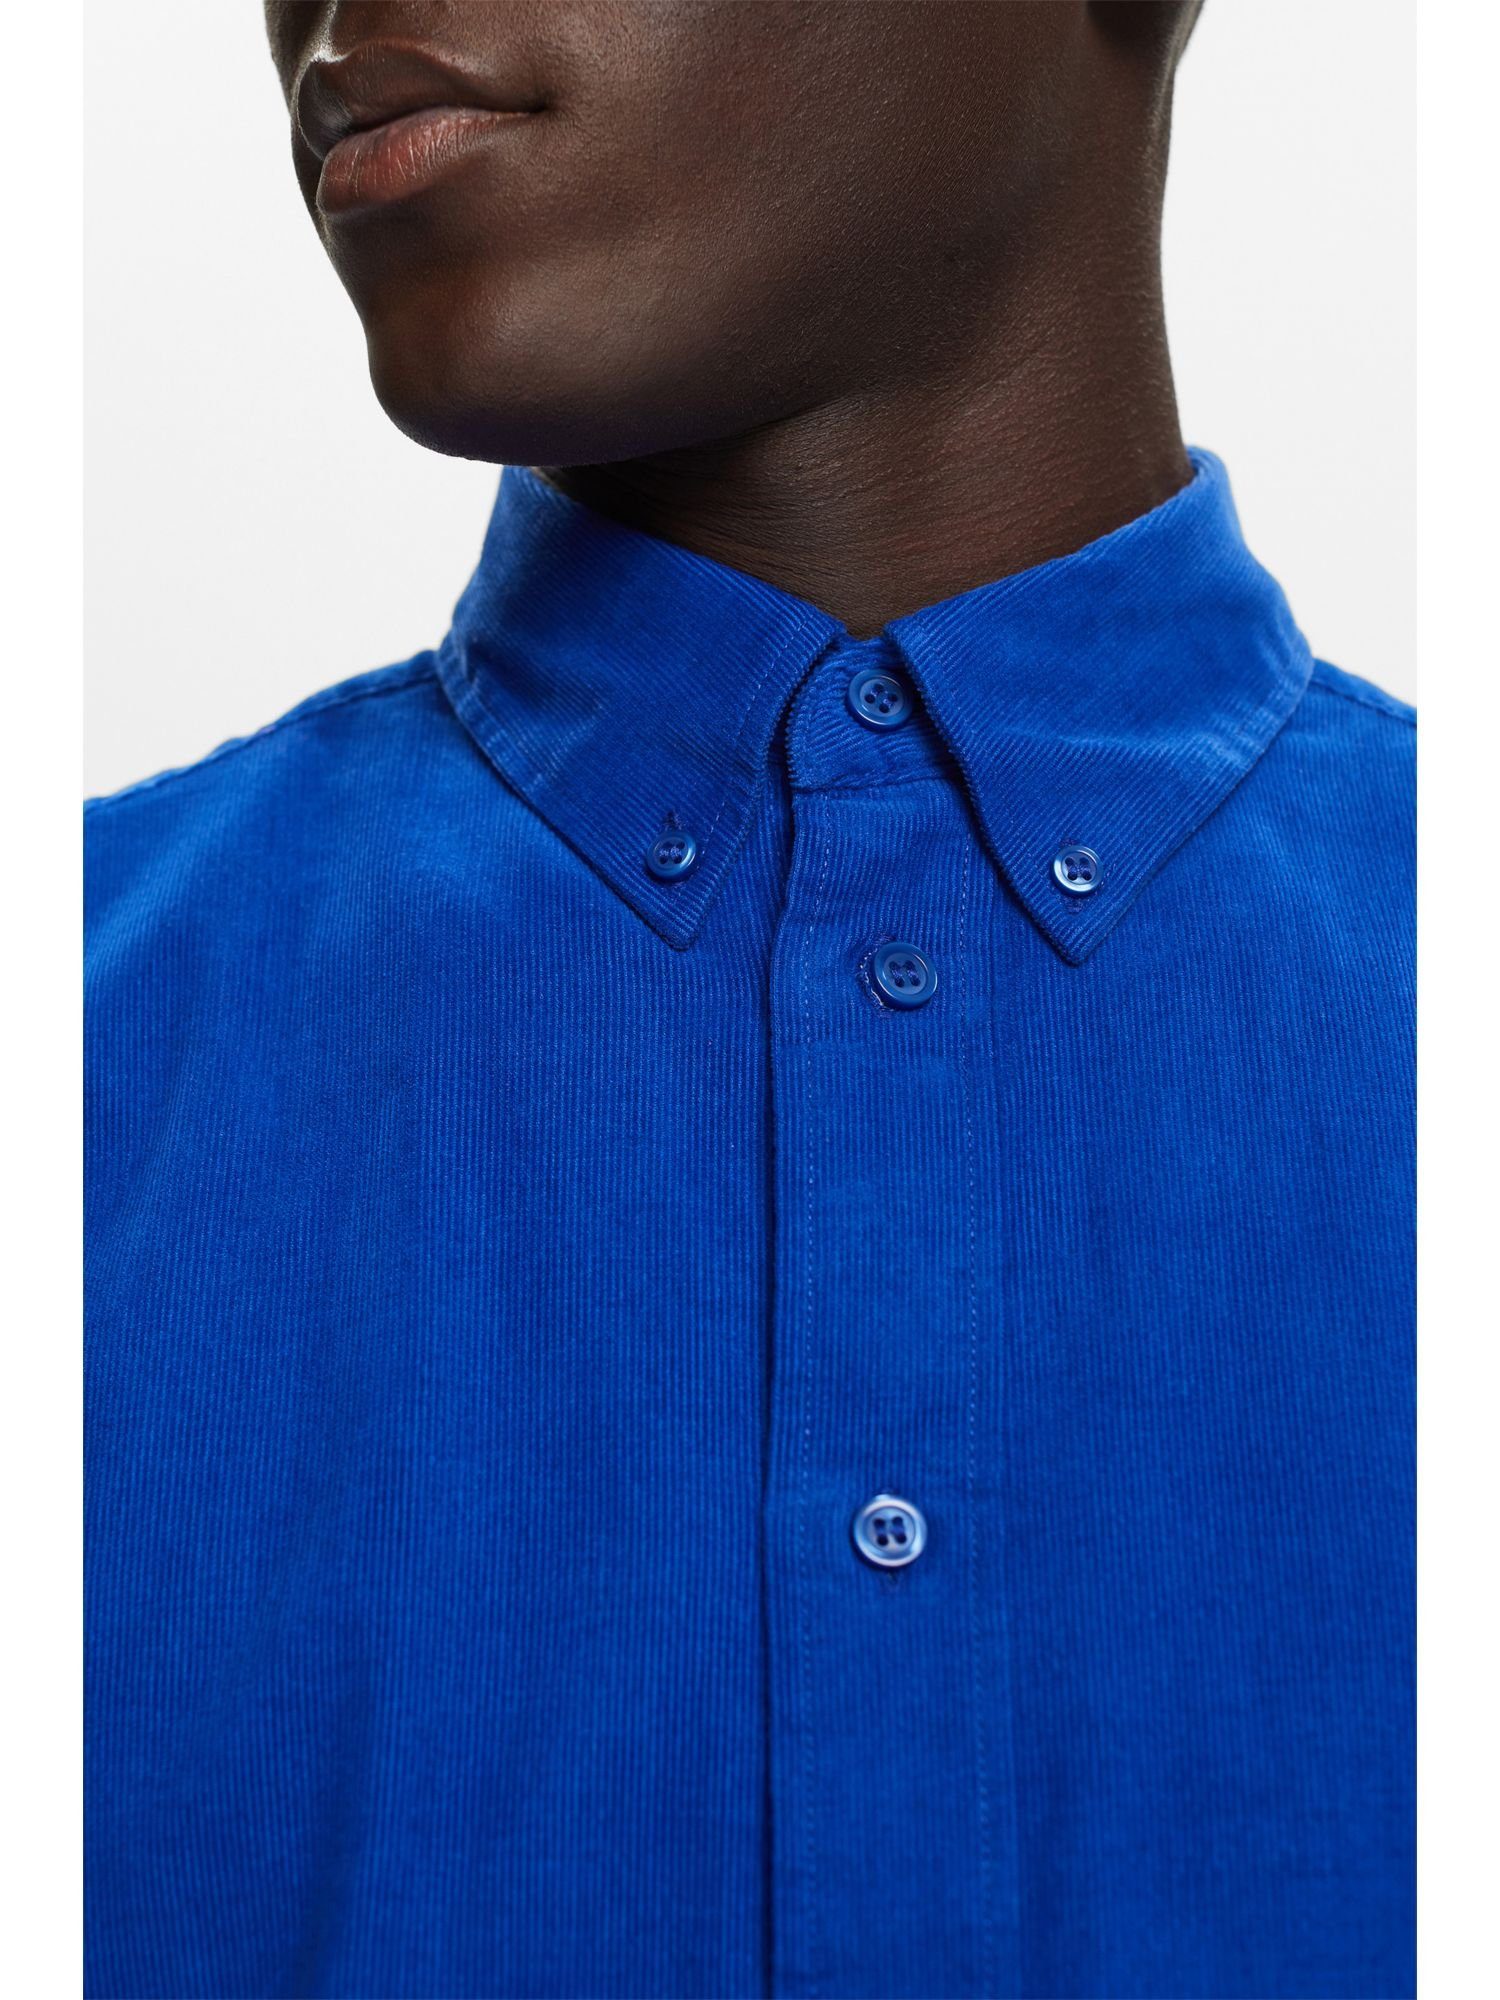 Baumwolle aus BRIGHT BLUE Cord, Langarmhemd Hemd 100% Esprit